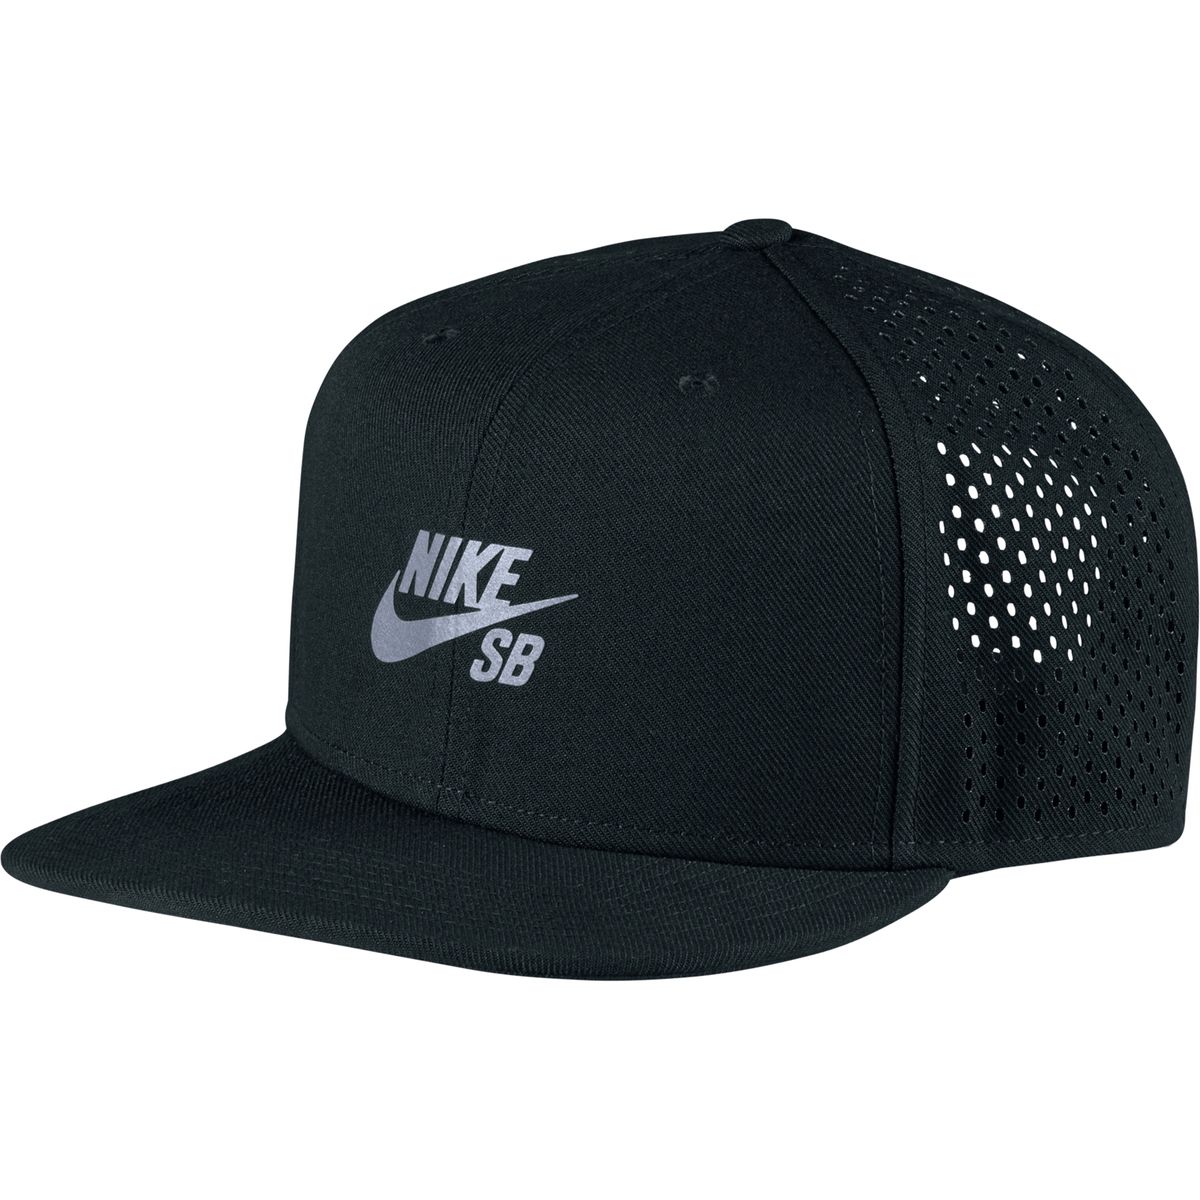 Nike Performance Pro Trucker Hat - Accessories